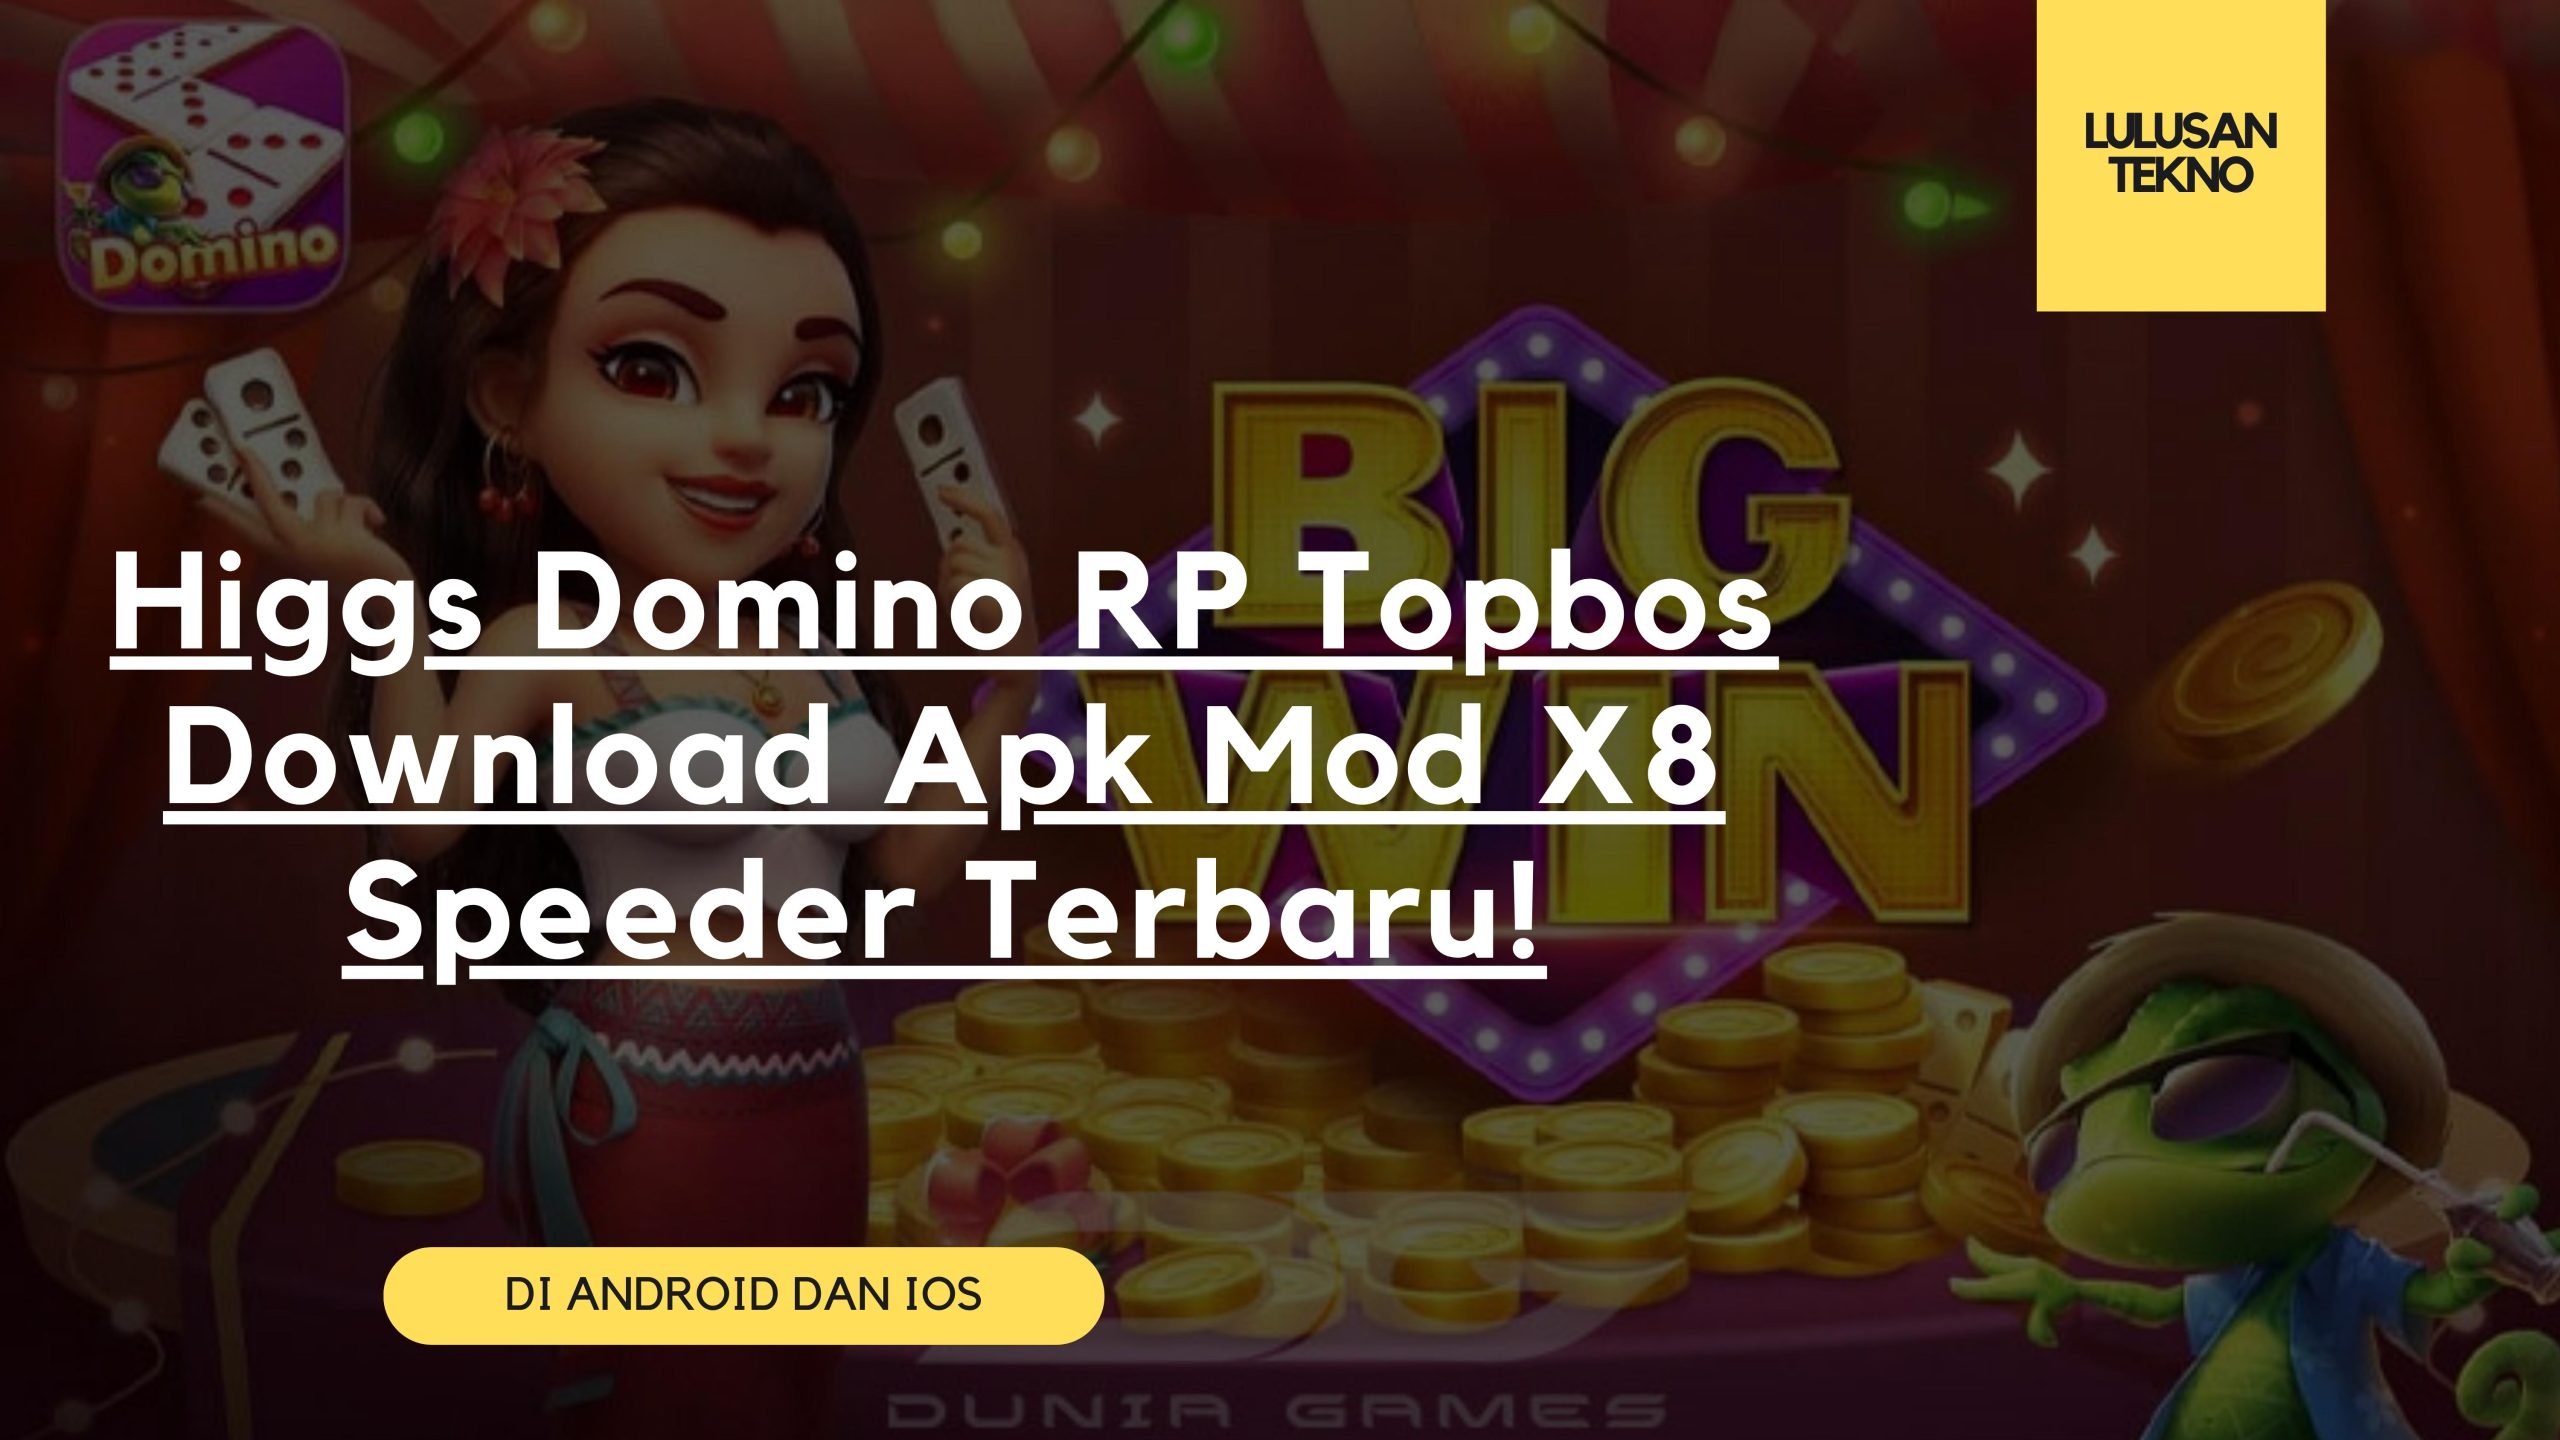 Higgs Domino RP Topbos Download Apk Mod X8 Speeder Terbaru!